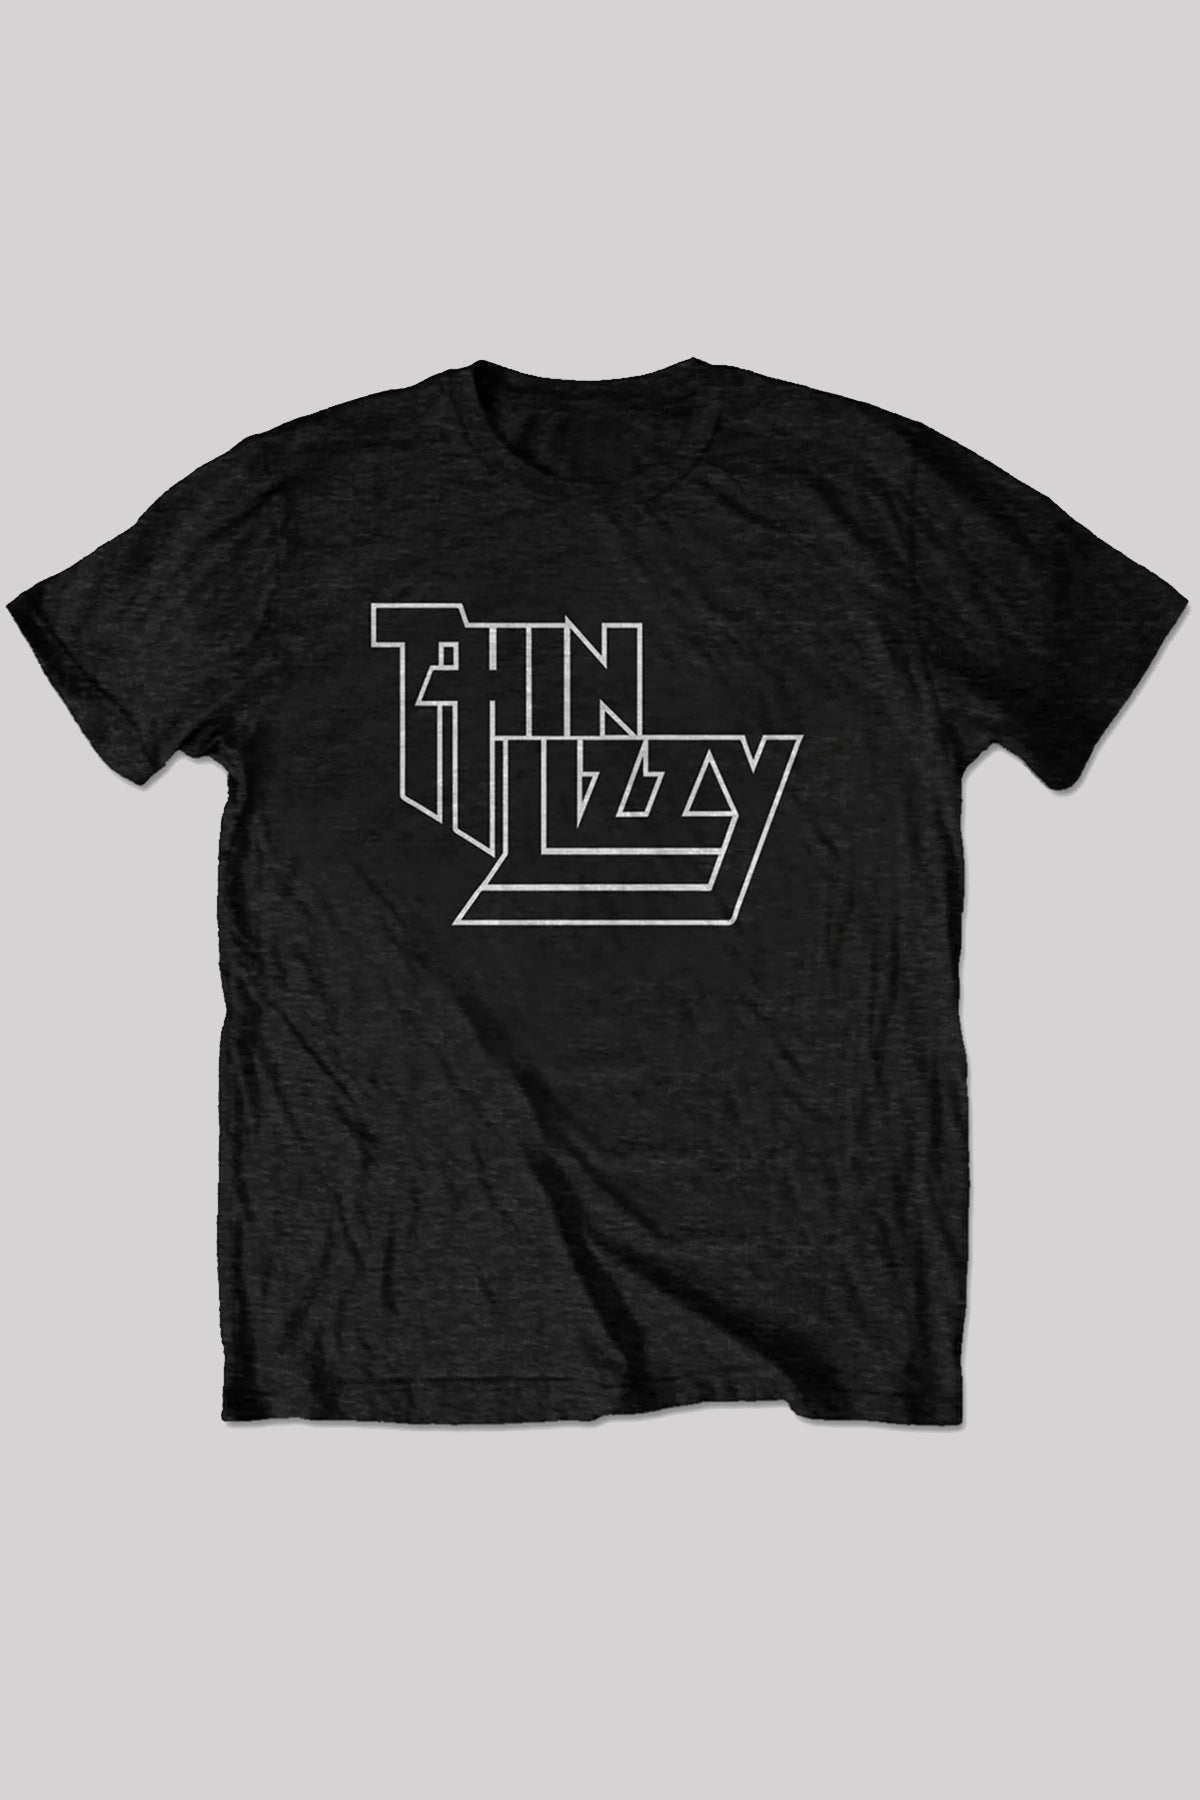 Thin Lizzy Logo Band Rock T-Shirt